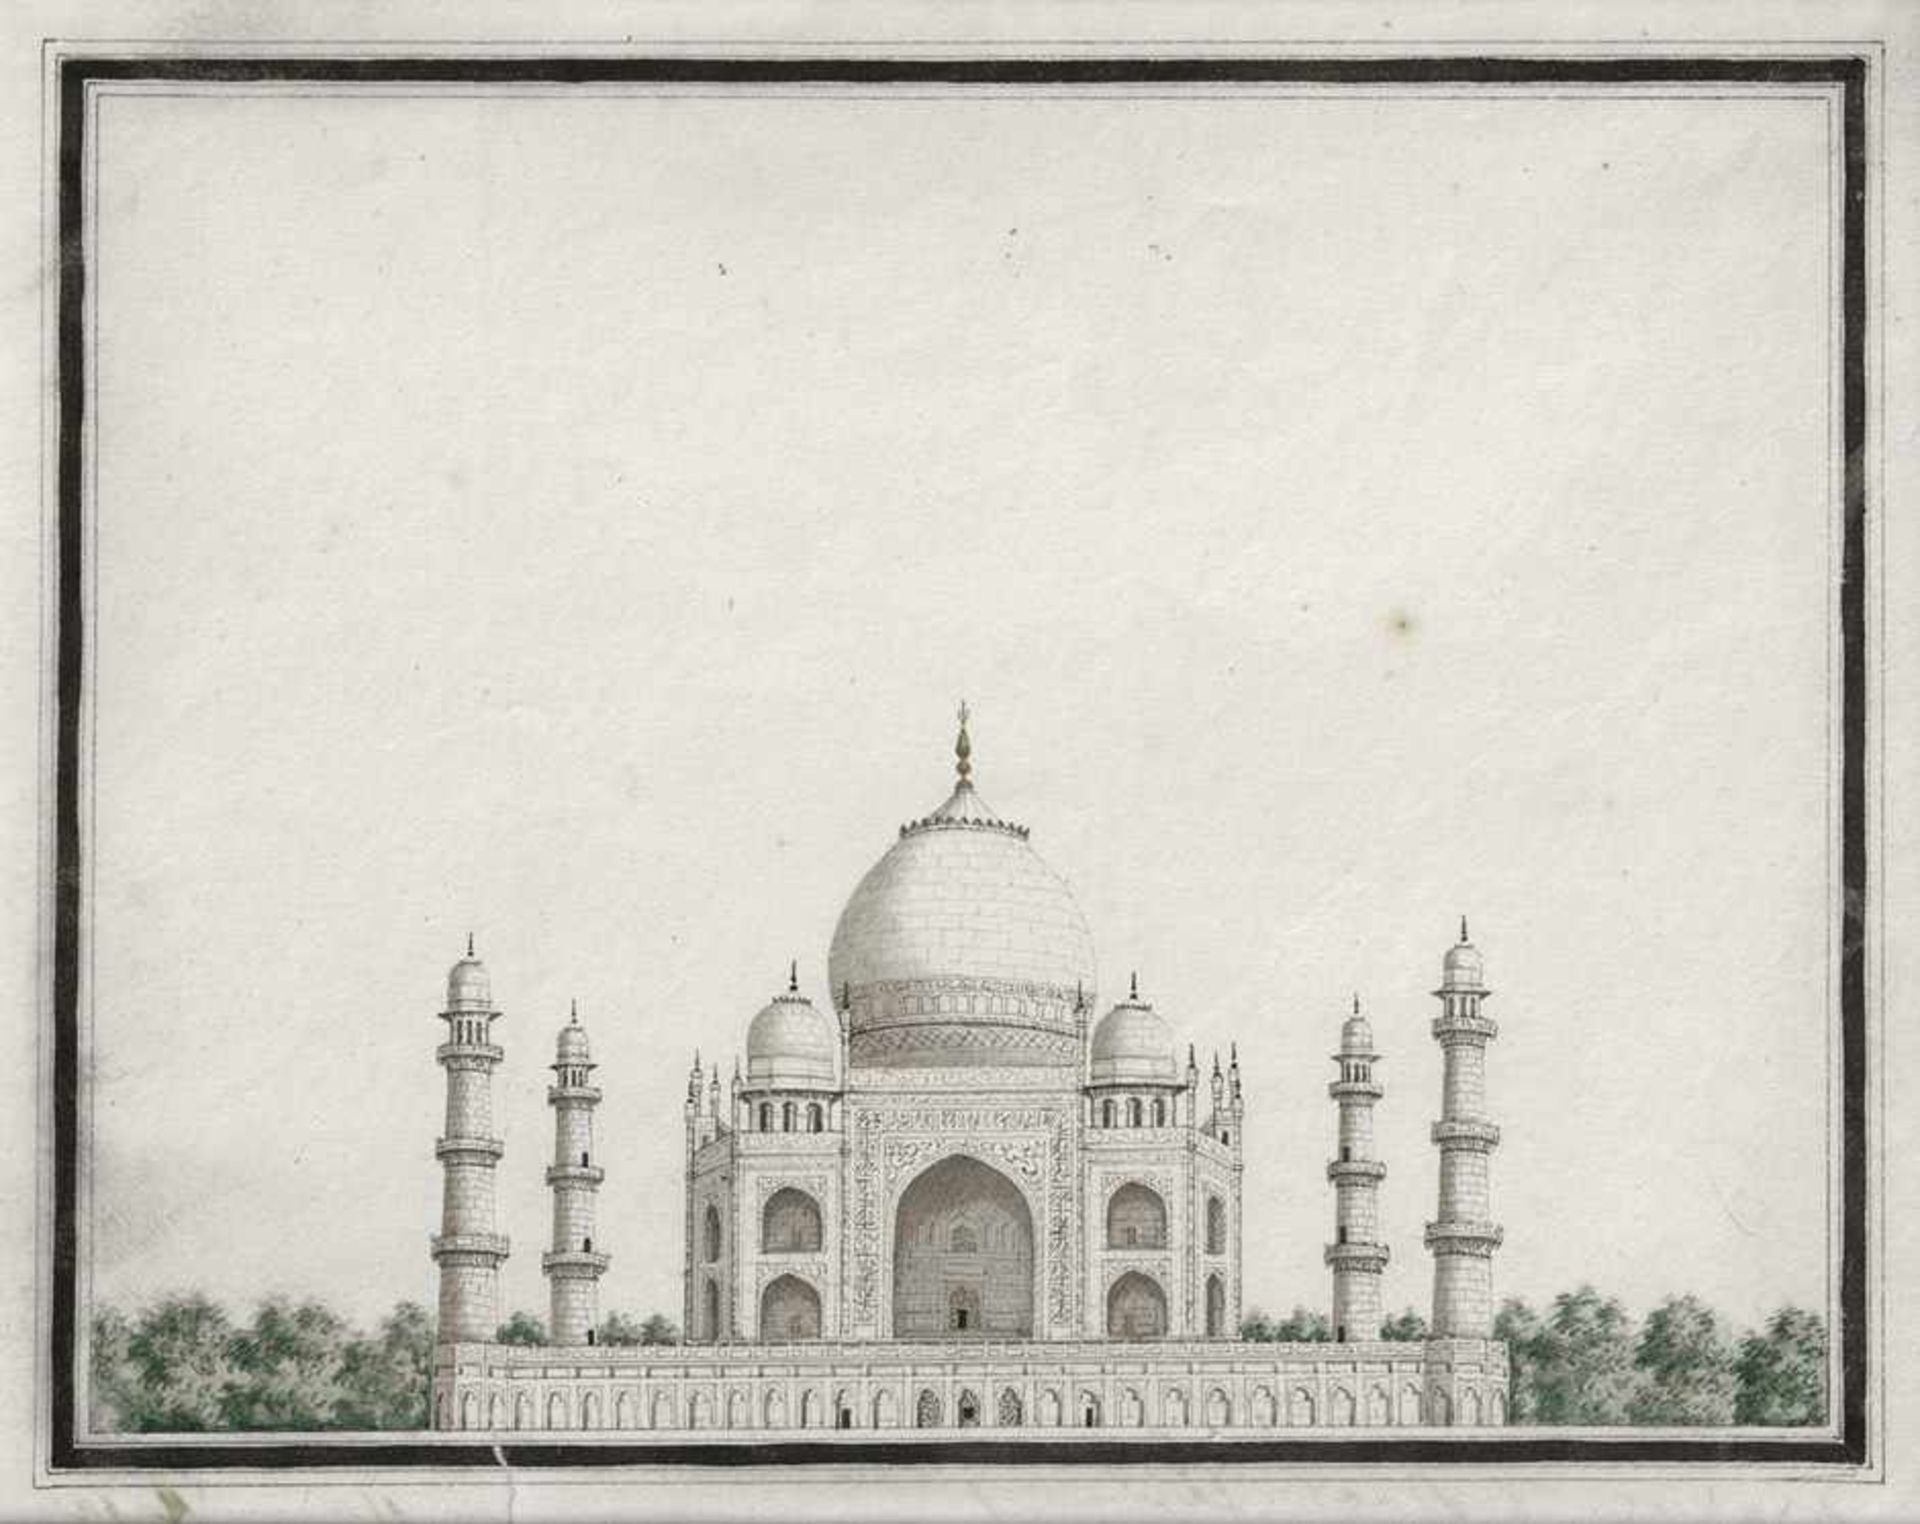 Englisch: 19. Jh. Ansicht des Taj Mahal in Agra19. Jh. Ansicht des Taj Mahal in Agra; Innenansicht